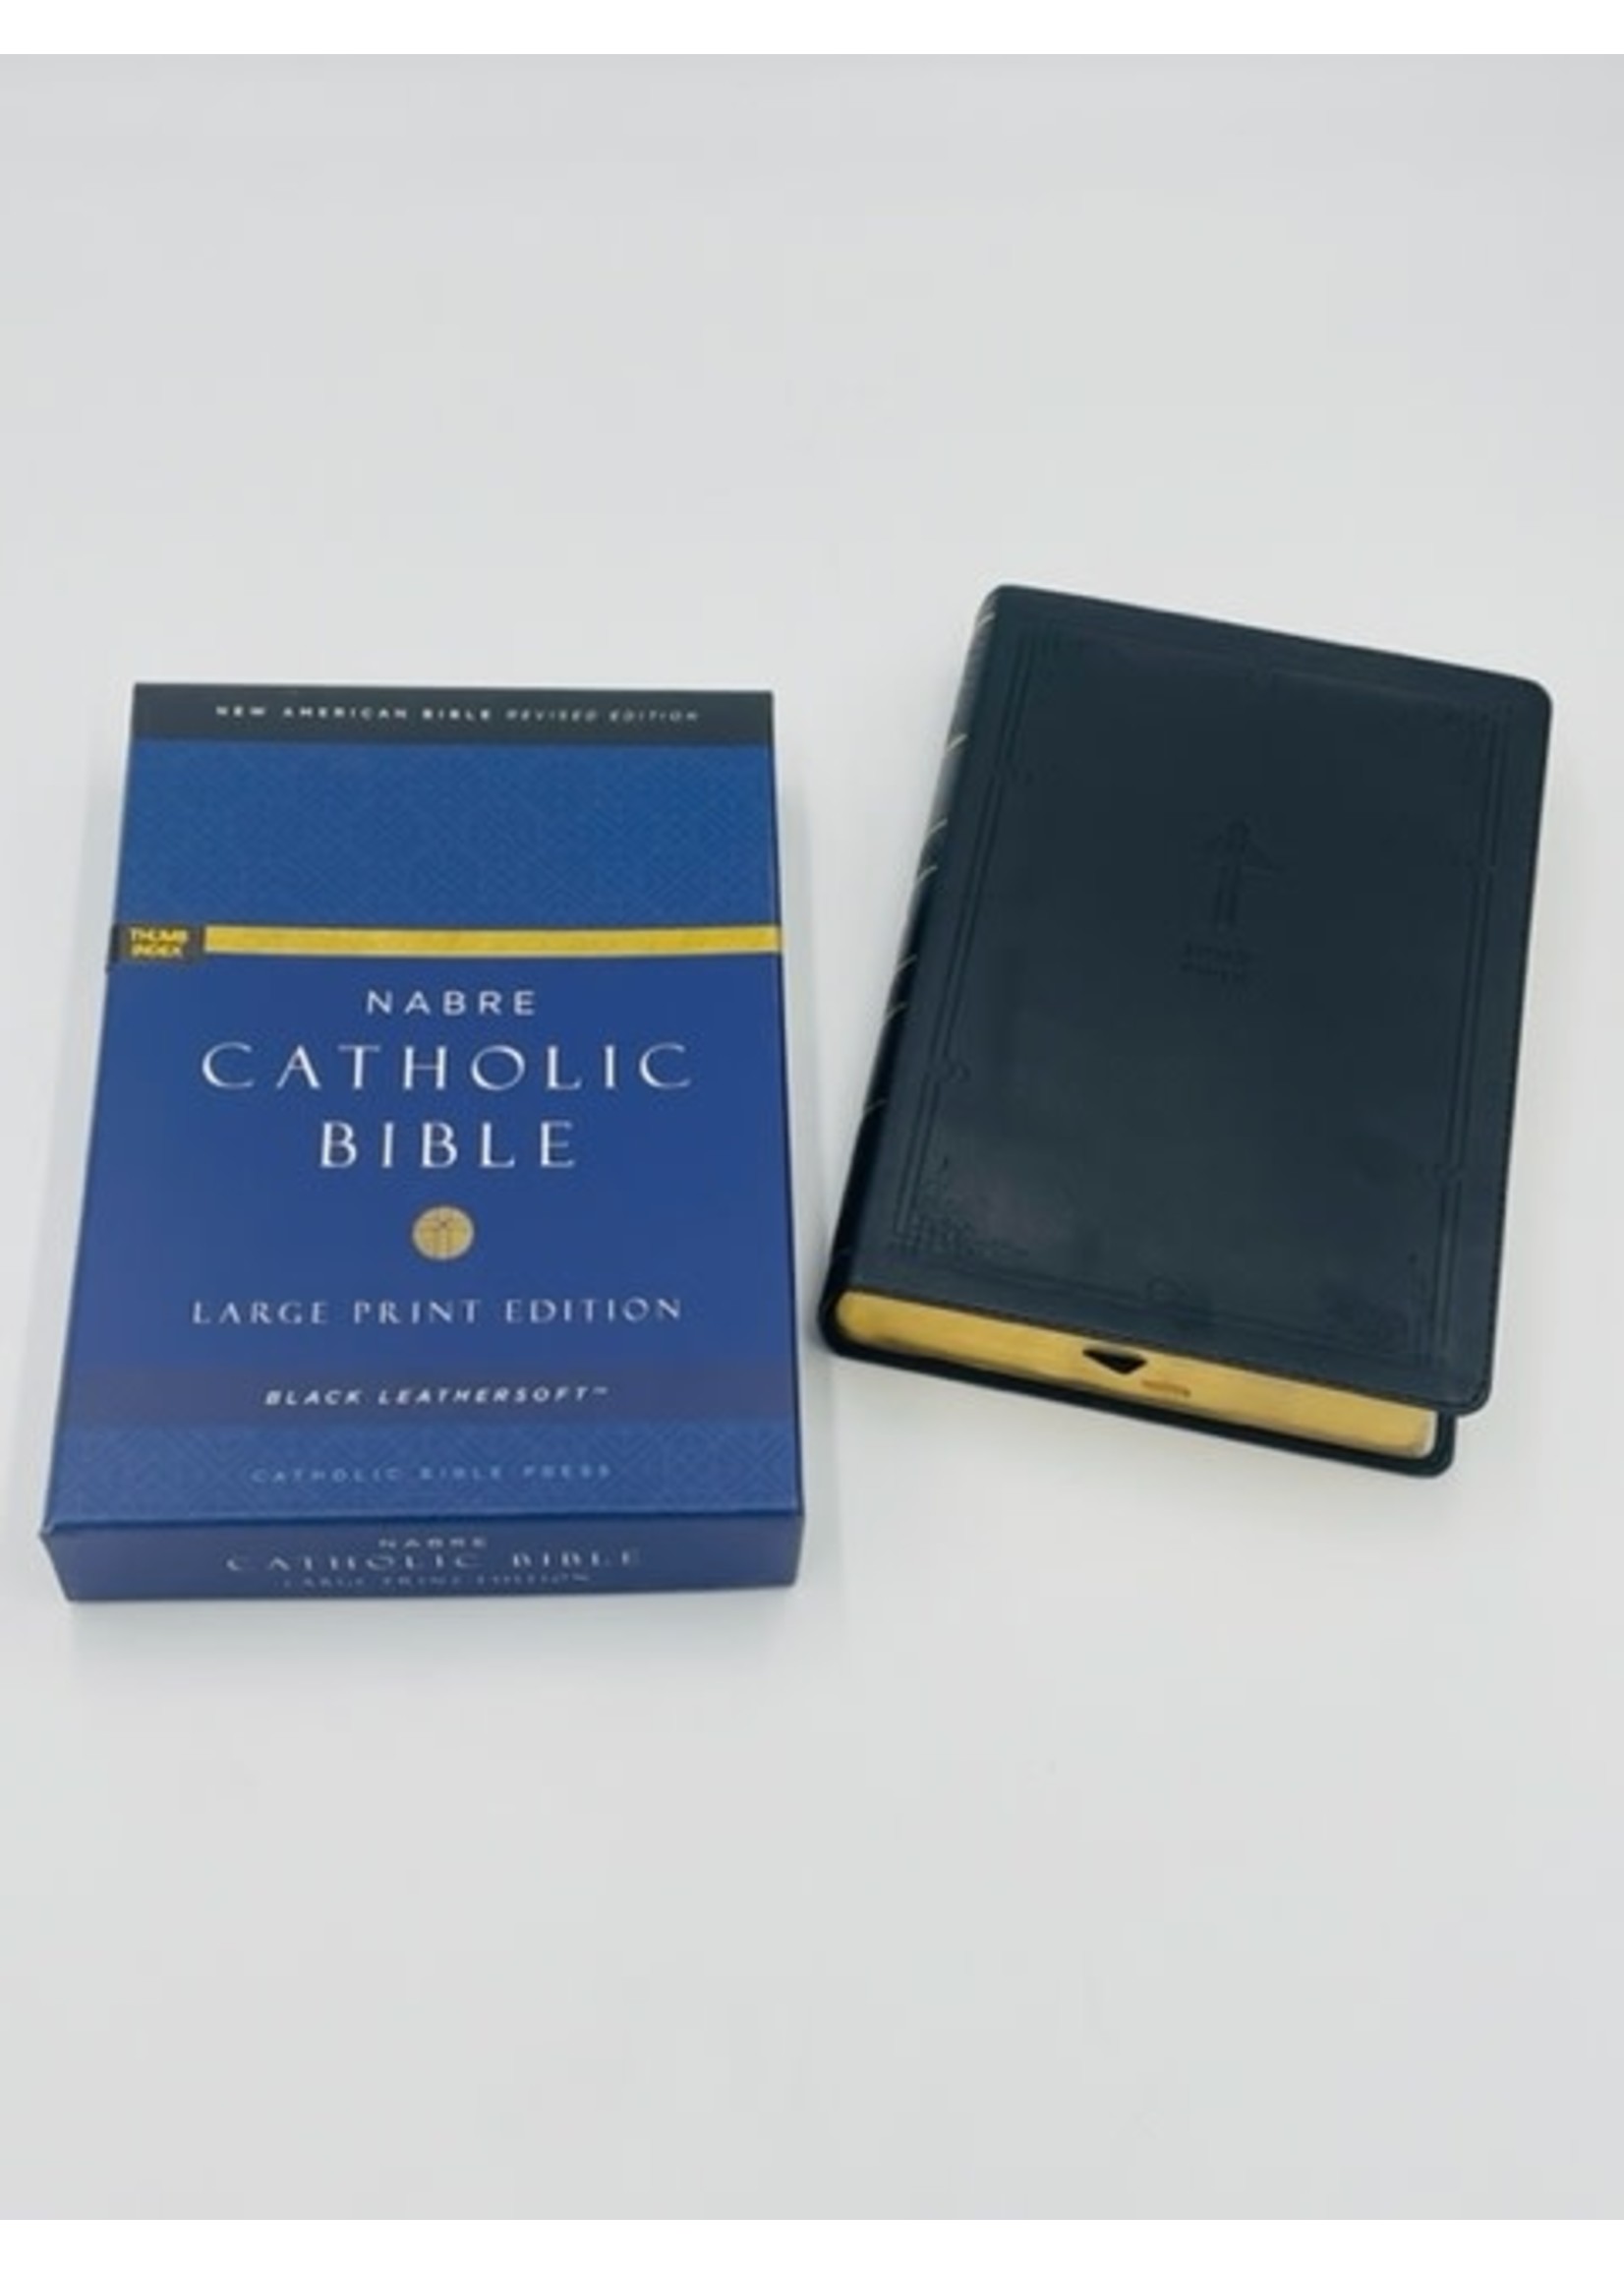 NABRE Catholic Bible, Large Print Edition, Thumb Indexed, Comfort Print, Black Leathersoft